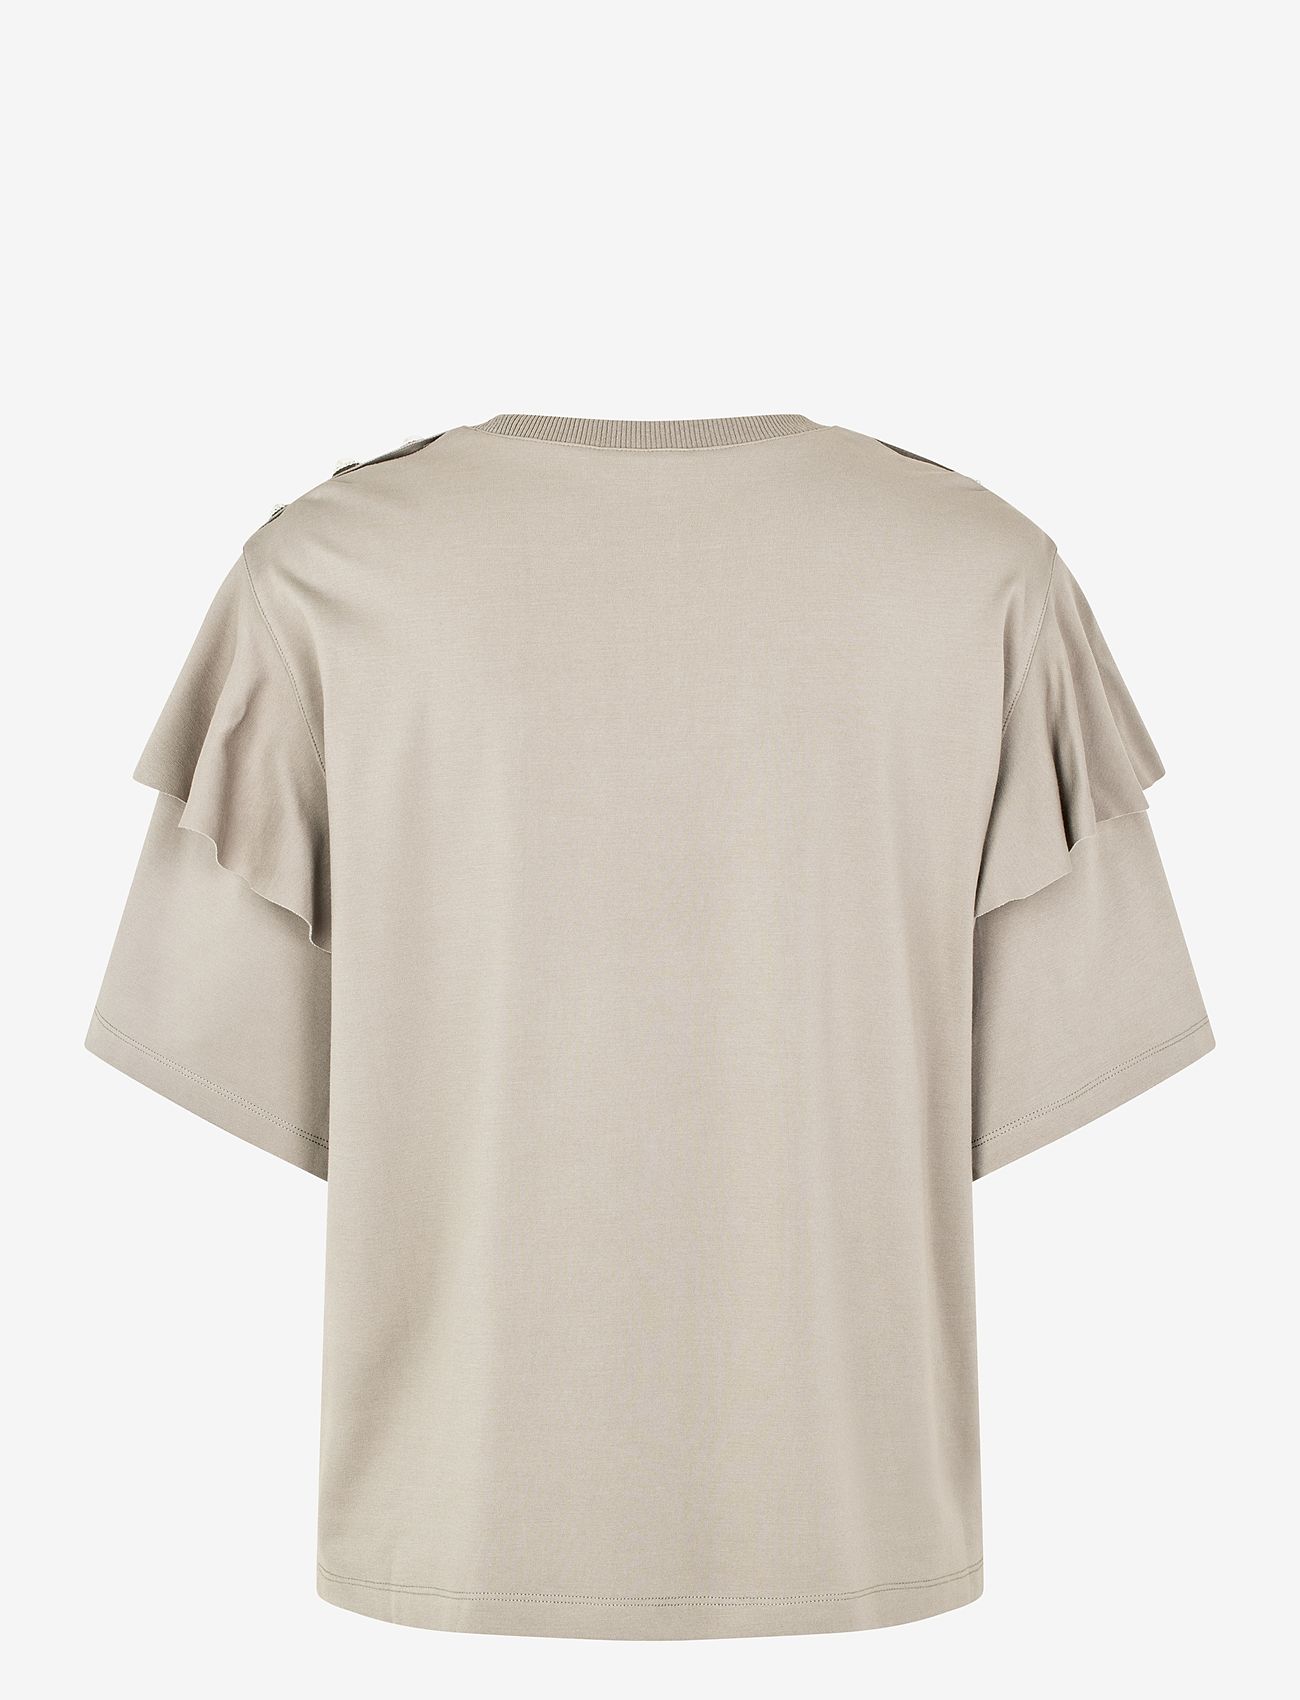 Custommade - Martina - t-shirts - 359 desert taupe - 1